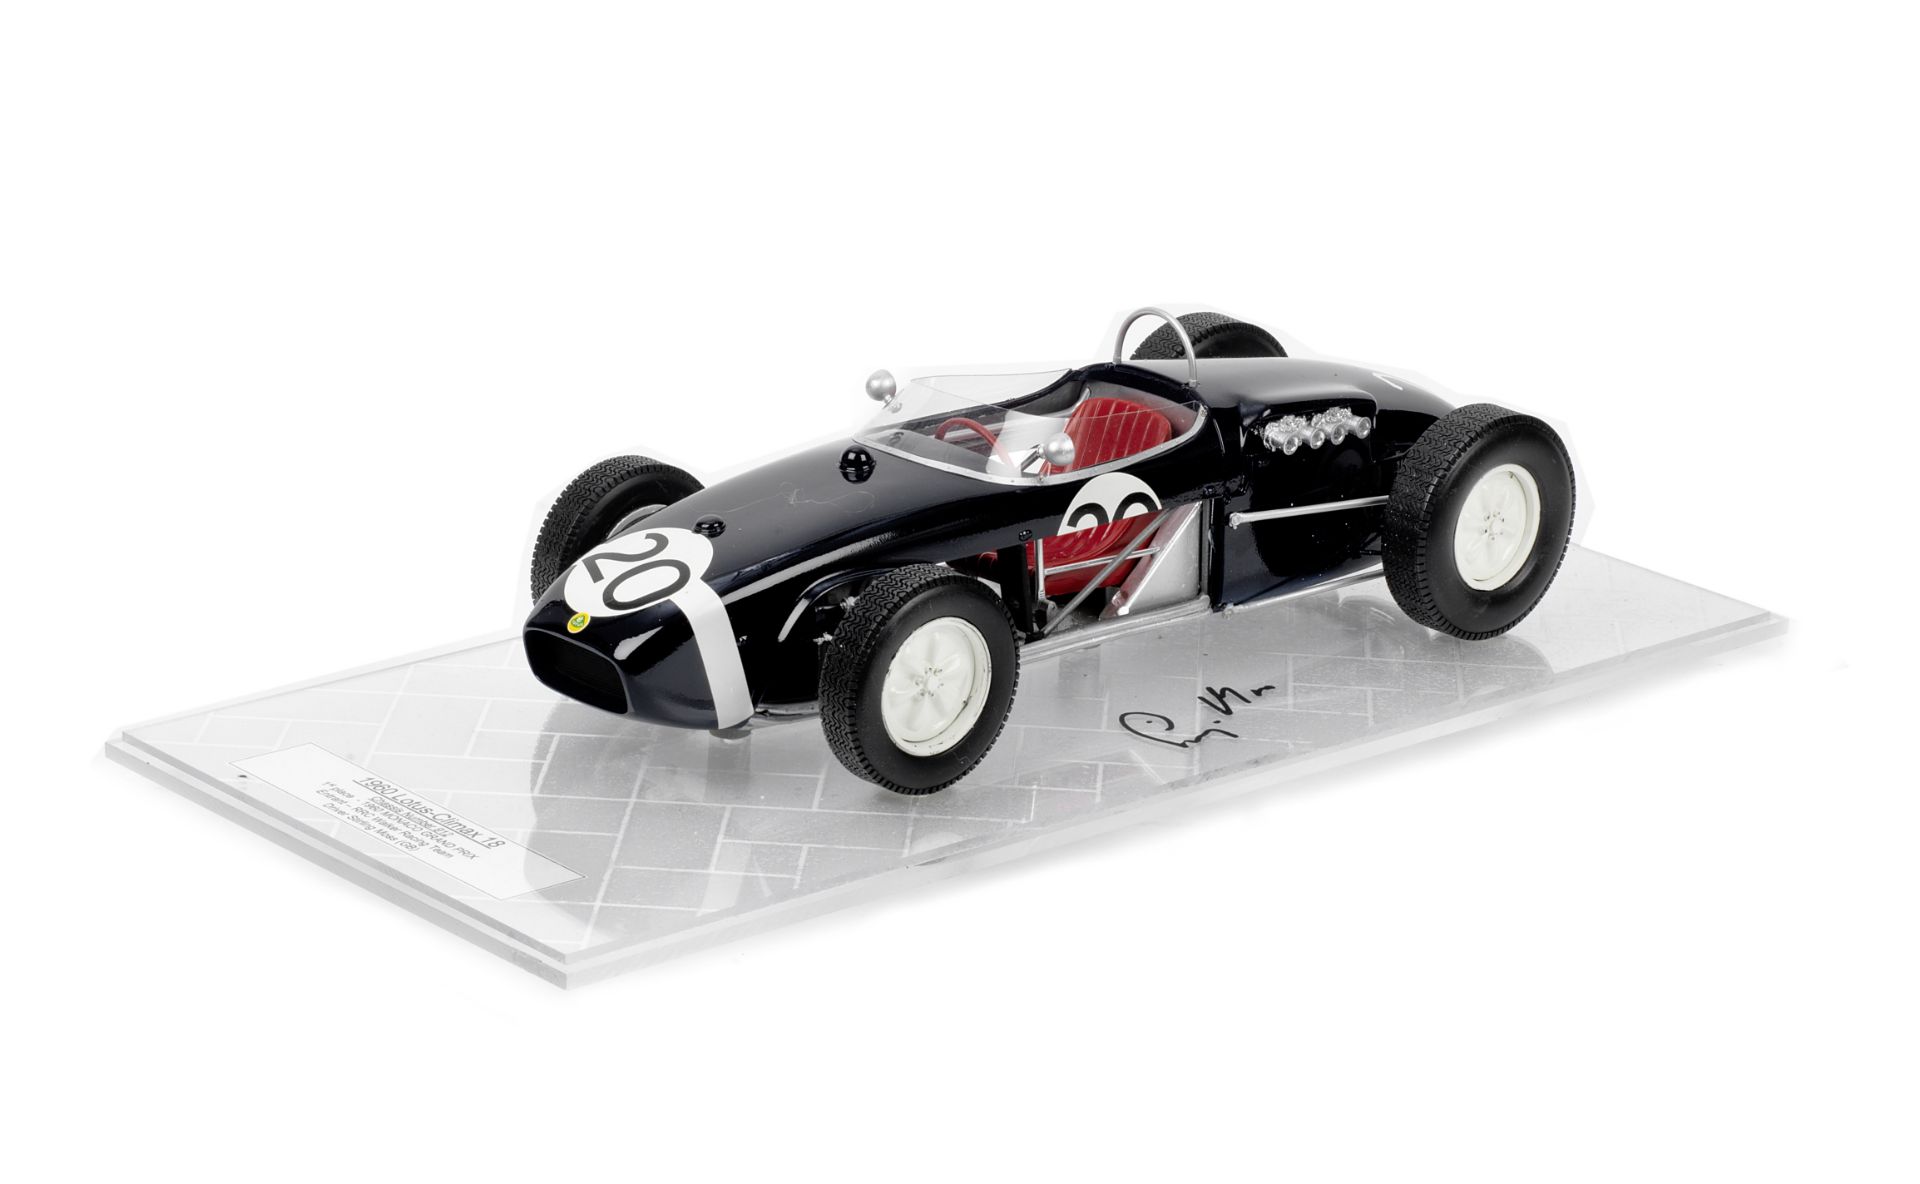 A fine 1:8 scale model of the 1960 Monaco Grand Prix winning Lotus-Climax 18 by R.A.E. Models,